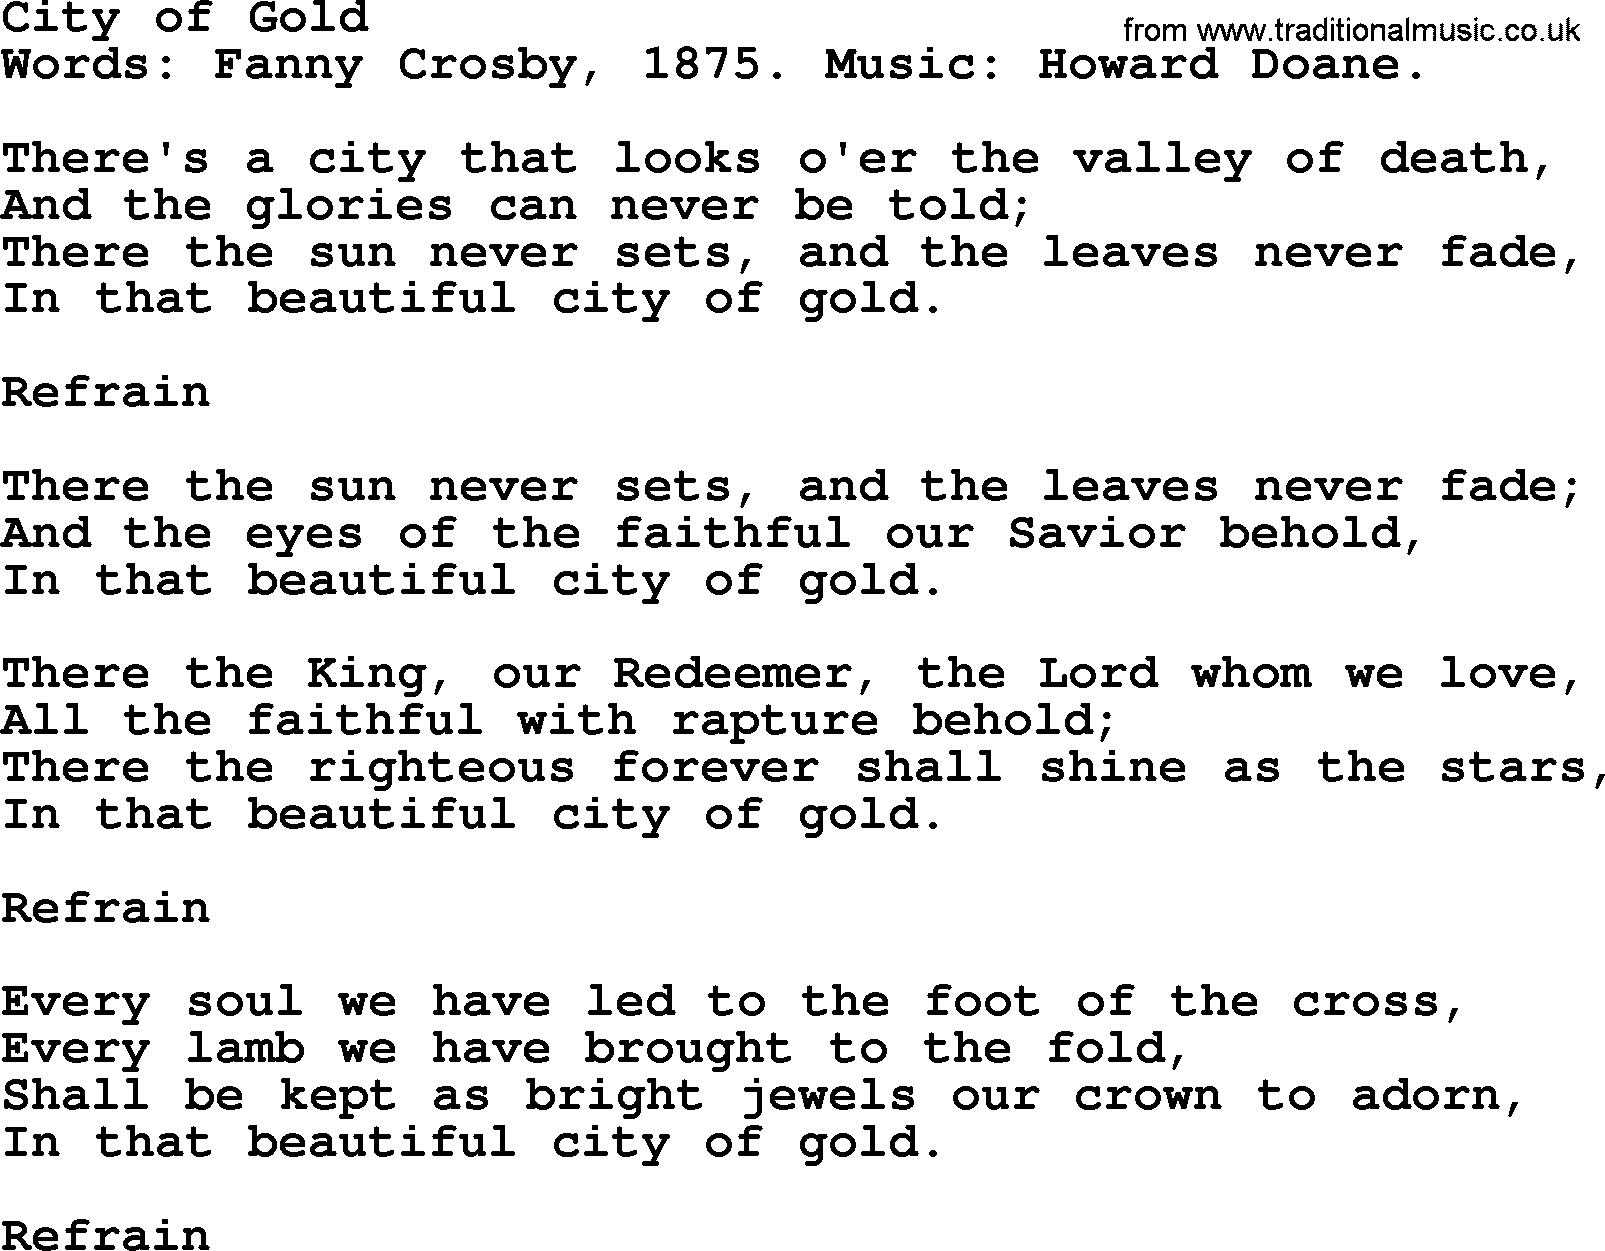 Fanny Crosby song: City Of Gold, lyrics